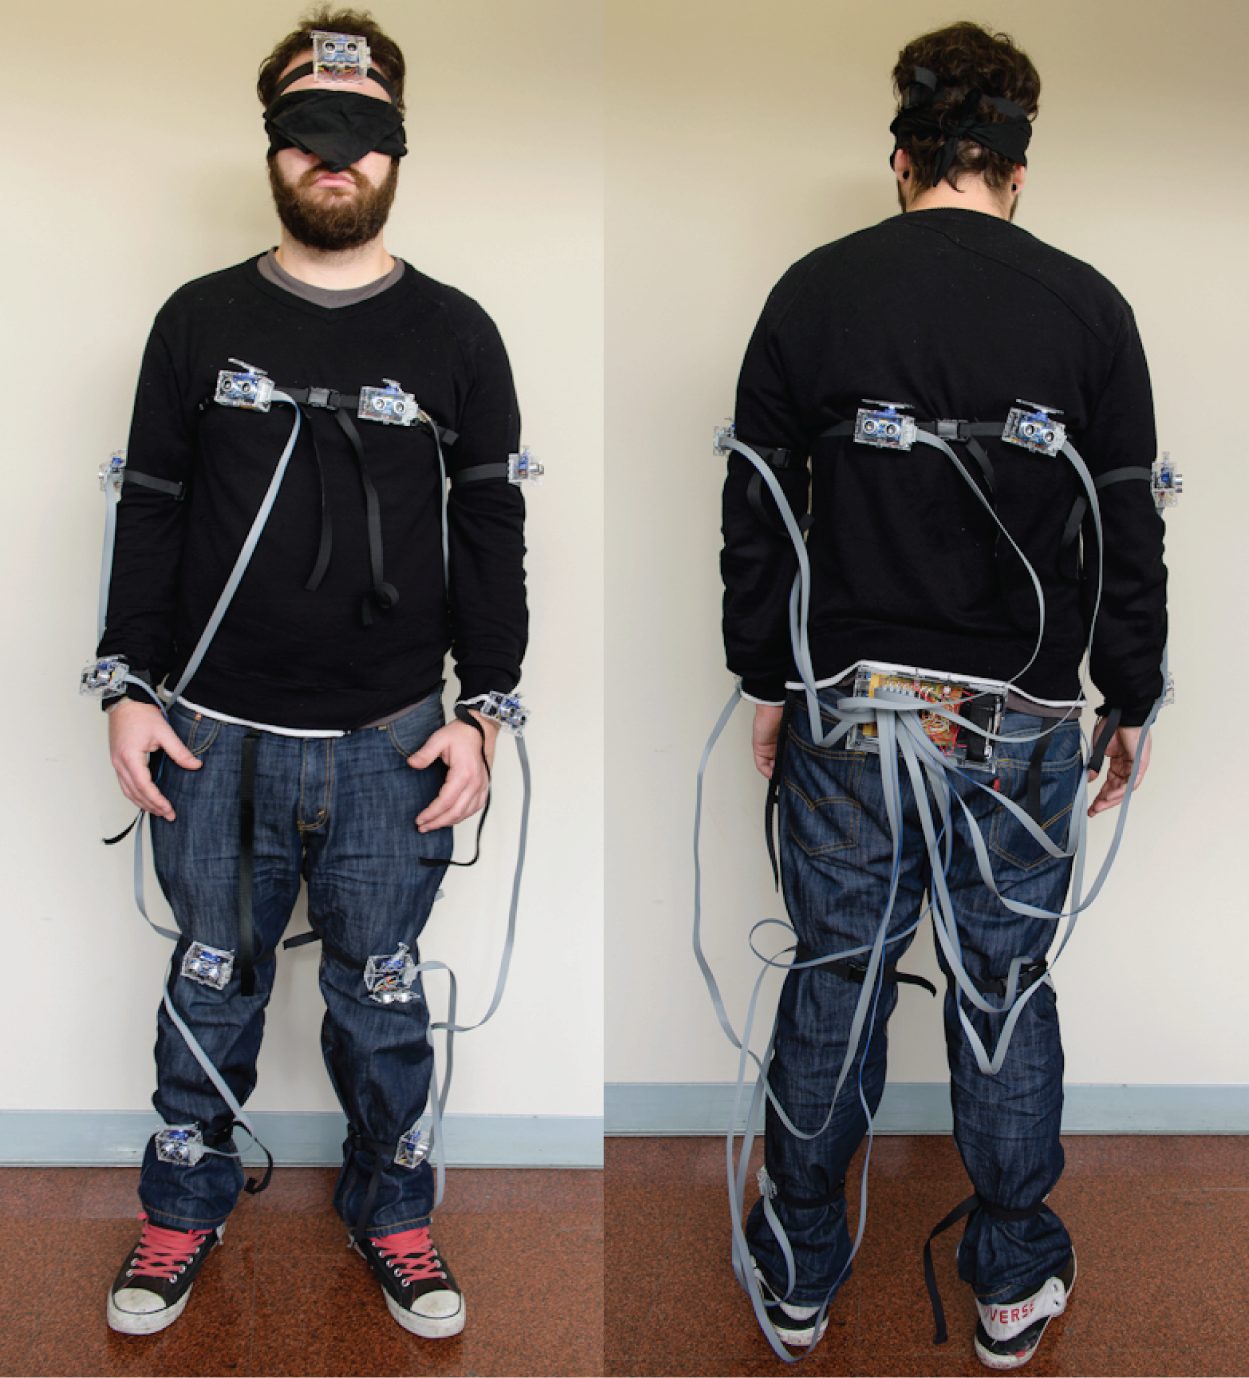 SpiderSense on a blindfolded user